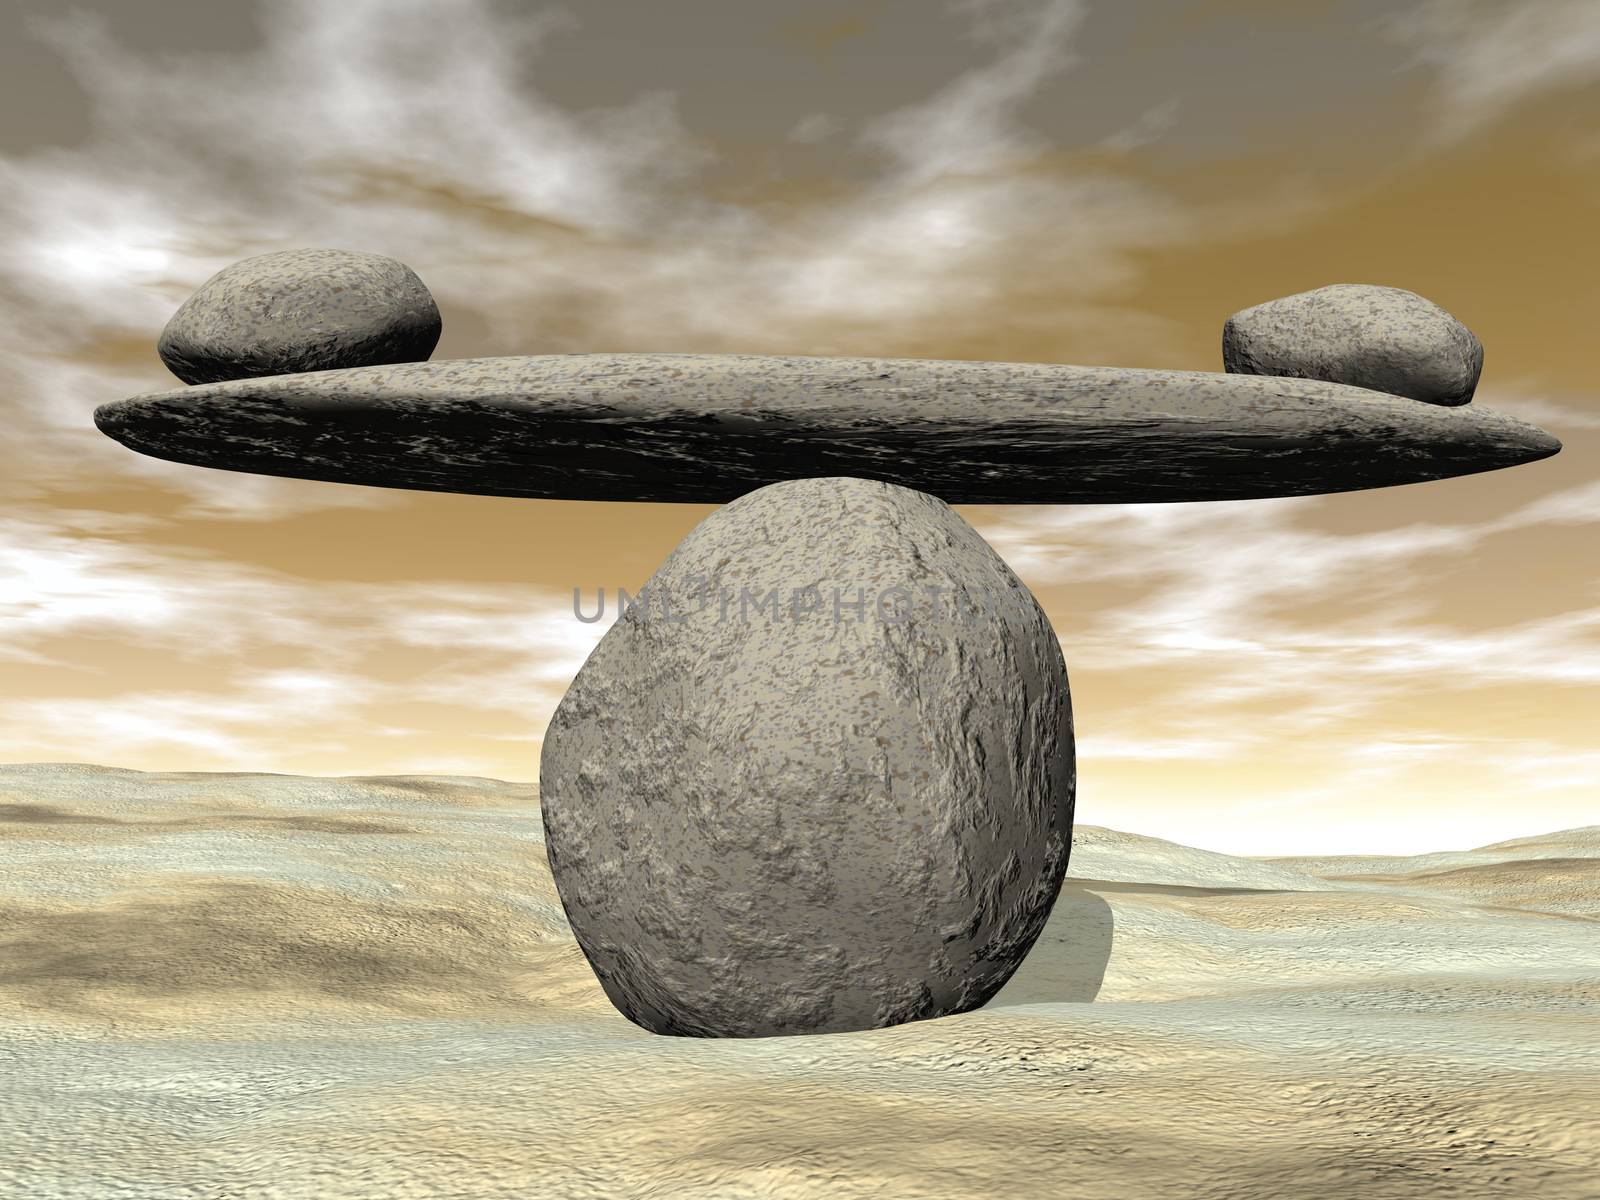 Balanced stones - 3D render by Elenaphotos21